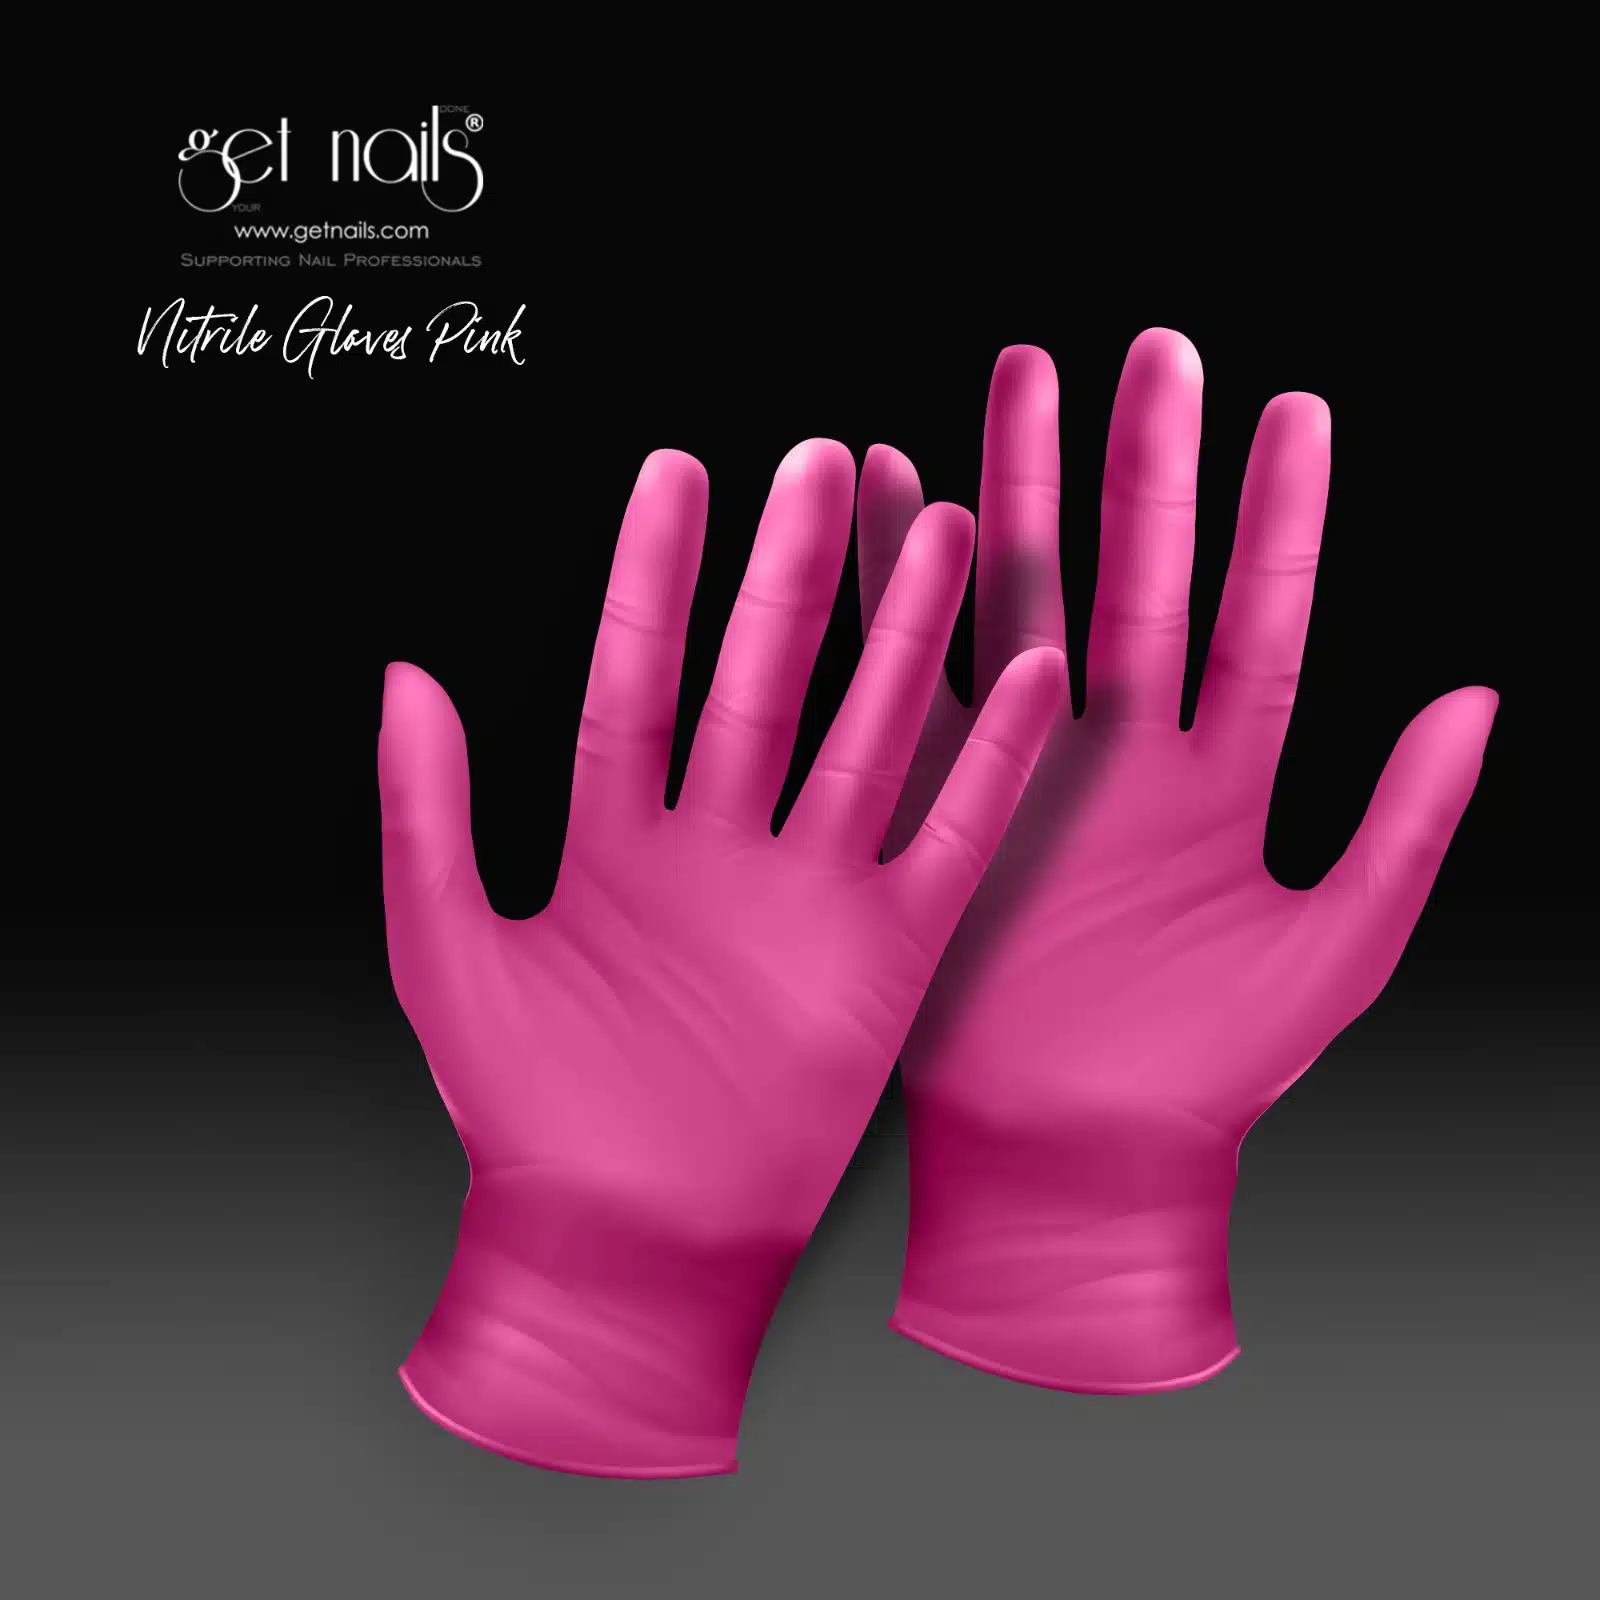 Get Nails Austria - Hygiene gloves size S, 10 pieces (pink)